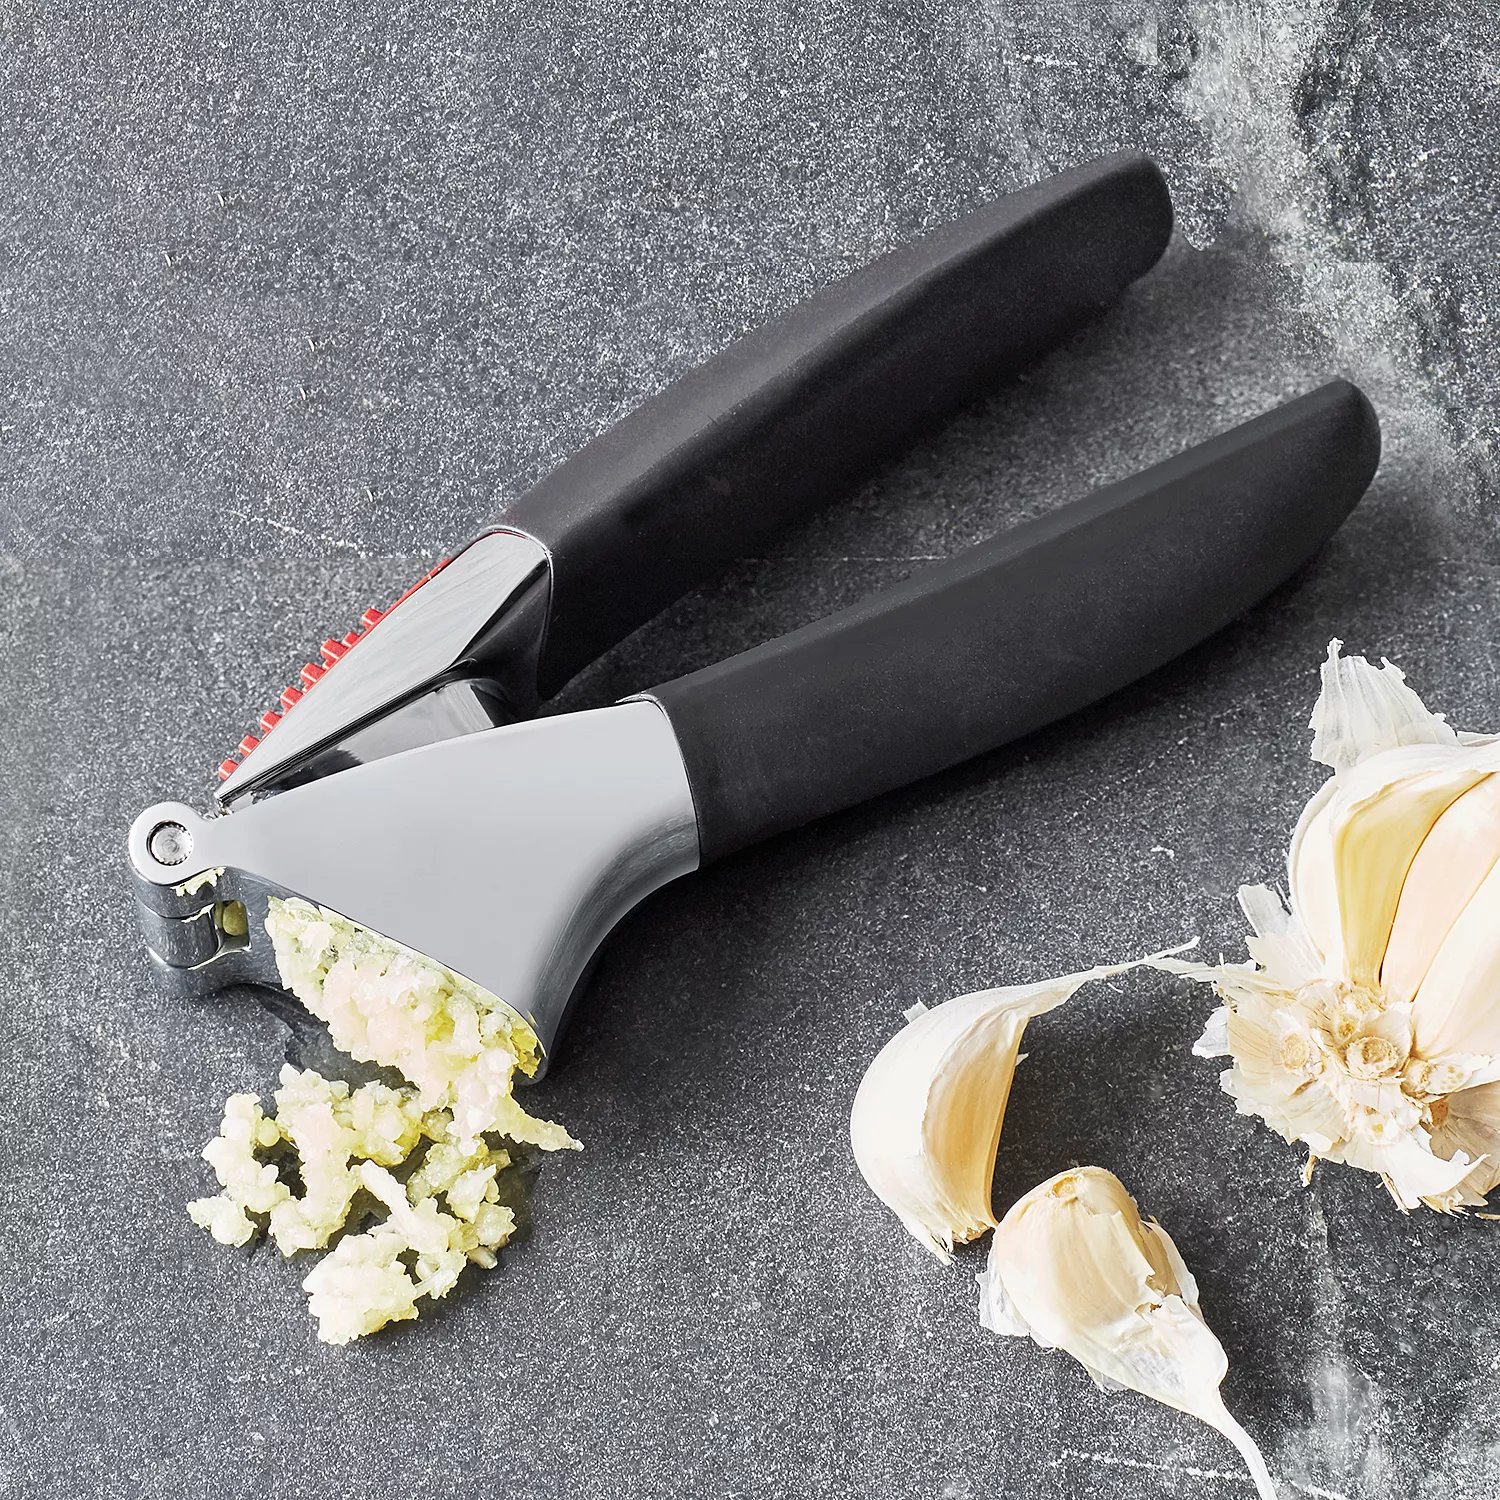 OXO Good Grips Garlic Slicer – Atlanta Grill Company